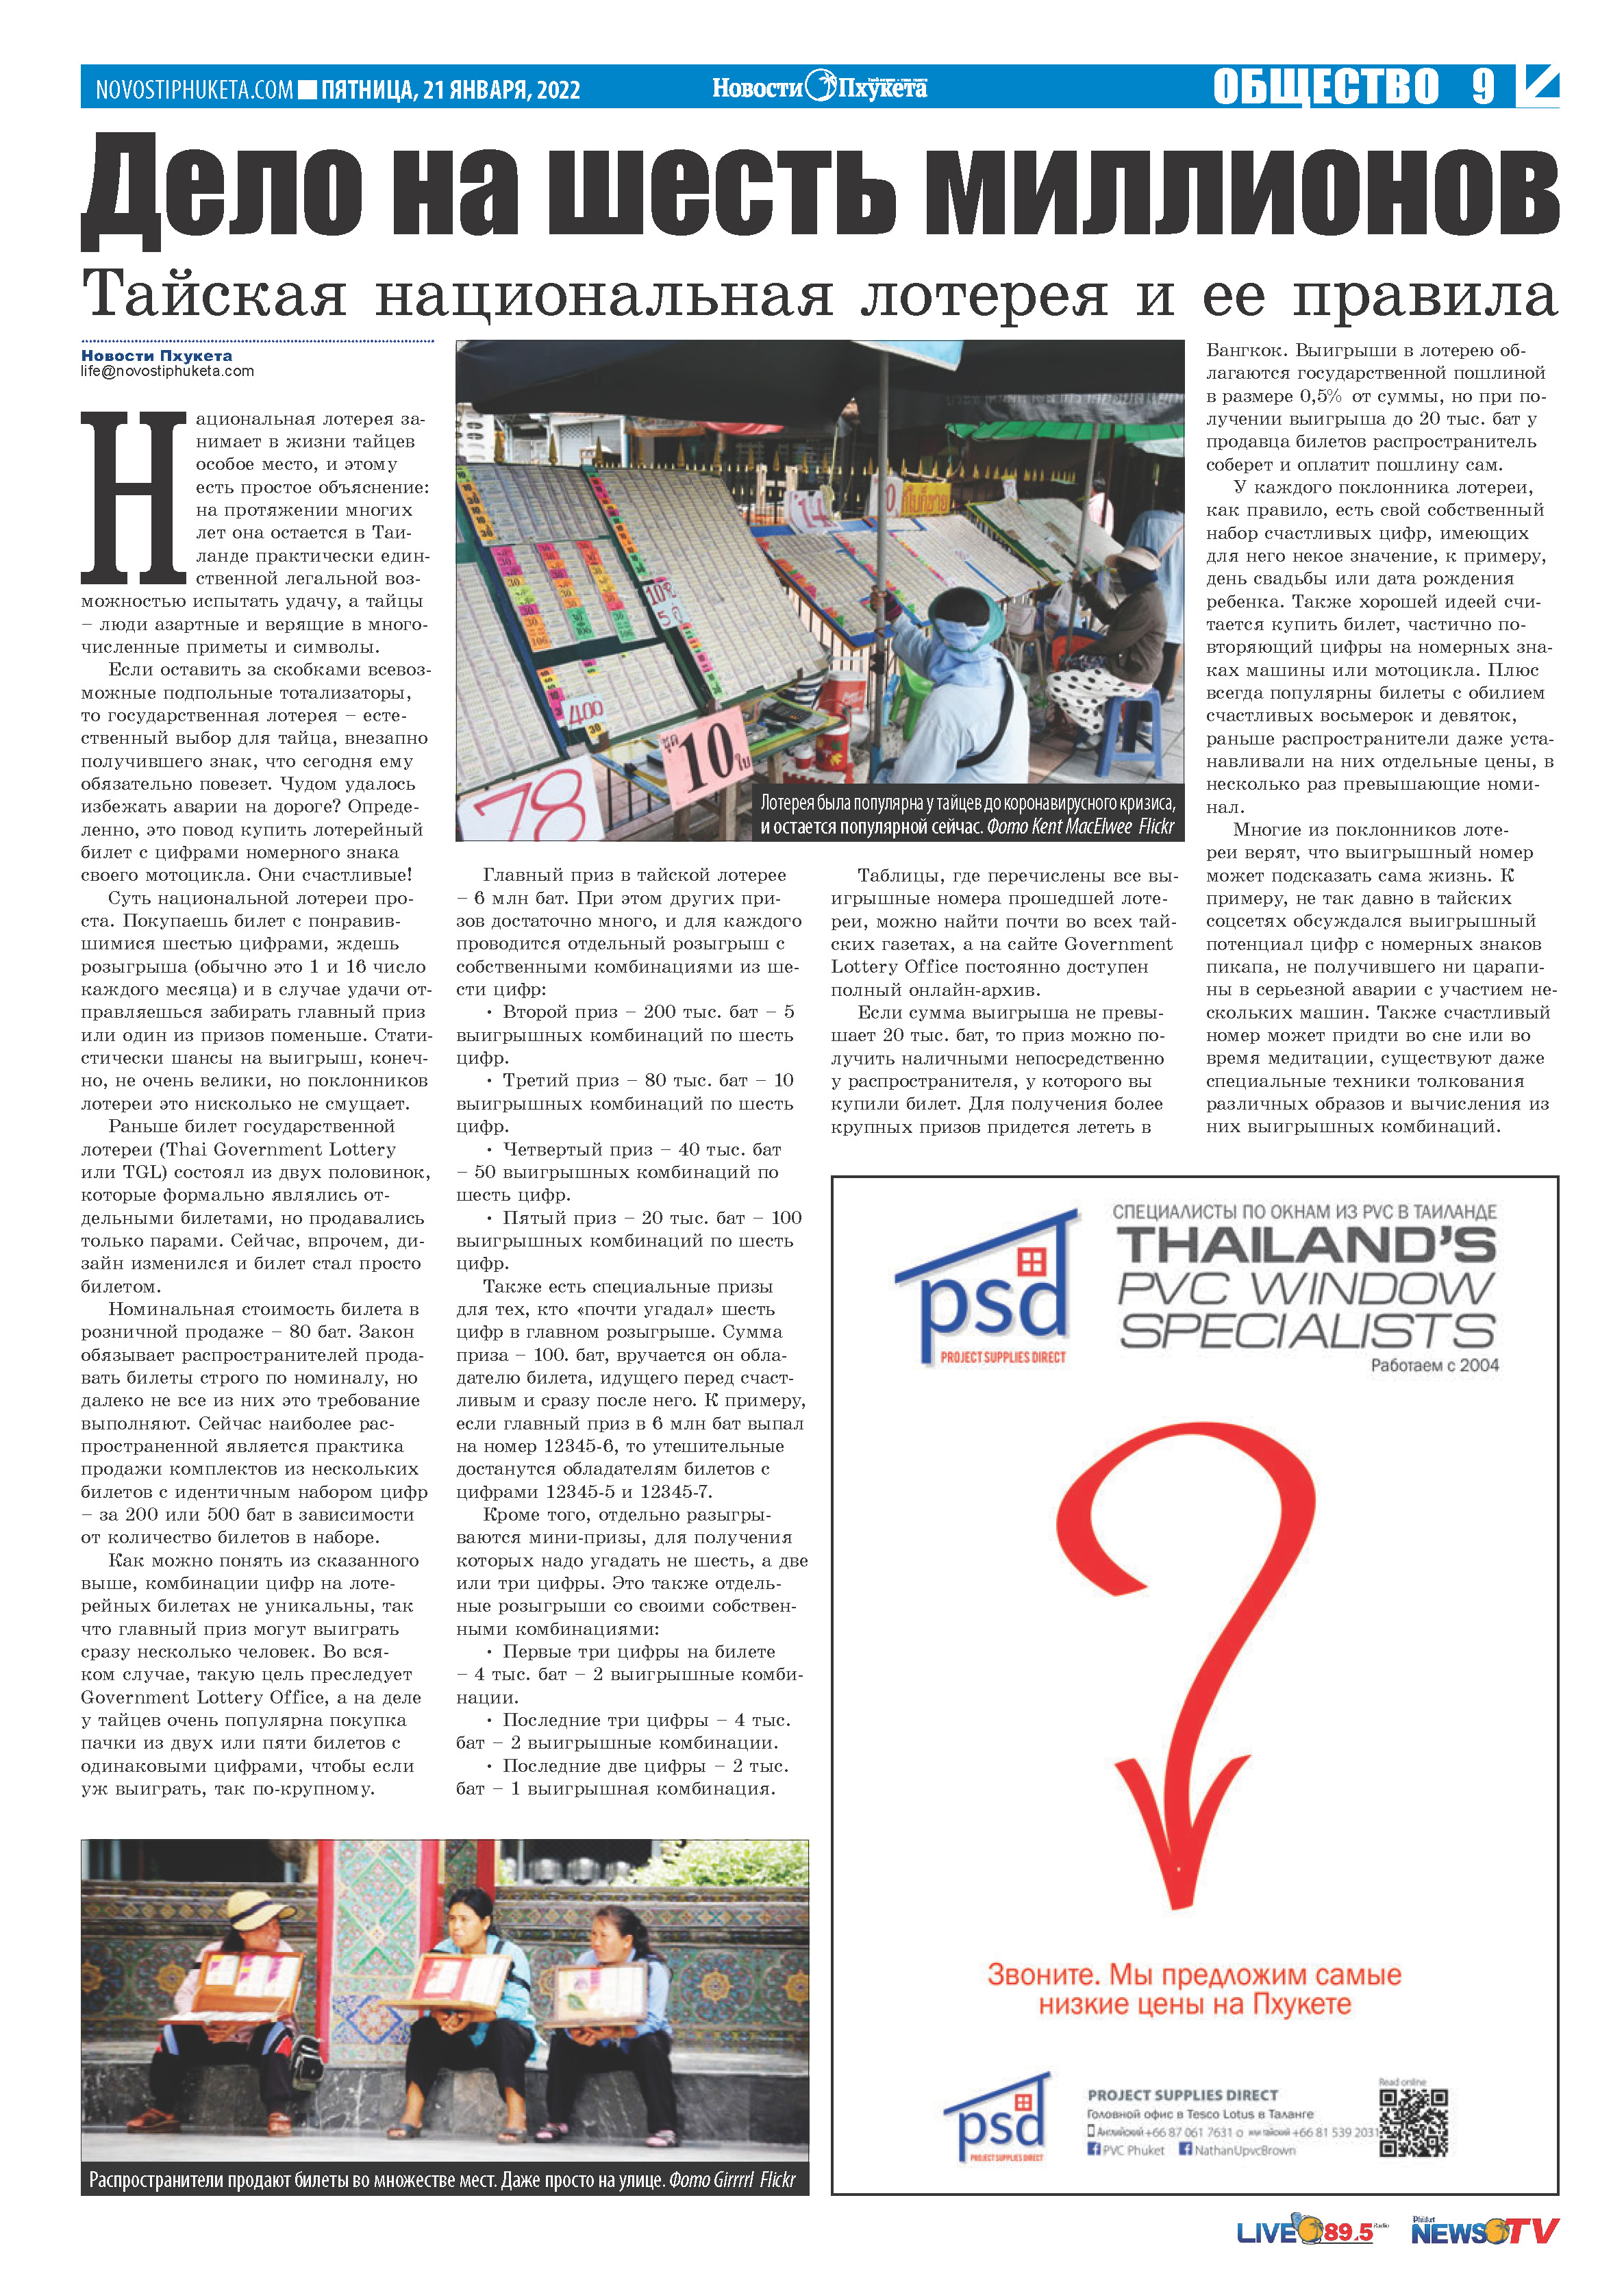 Phuket Newspaper - https://www.novostiphuketa.com/archive/21-01-2022/21-01-2022_Page_09.jpg